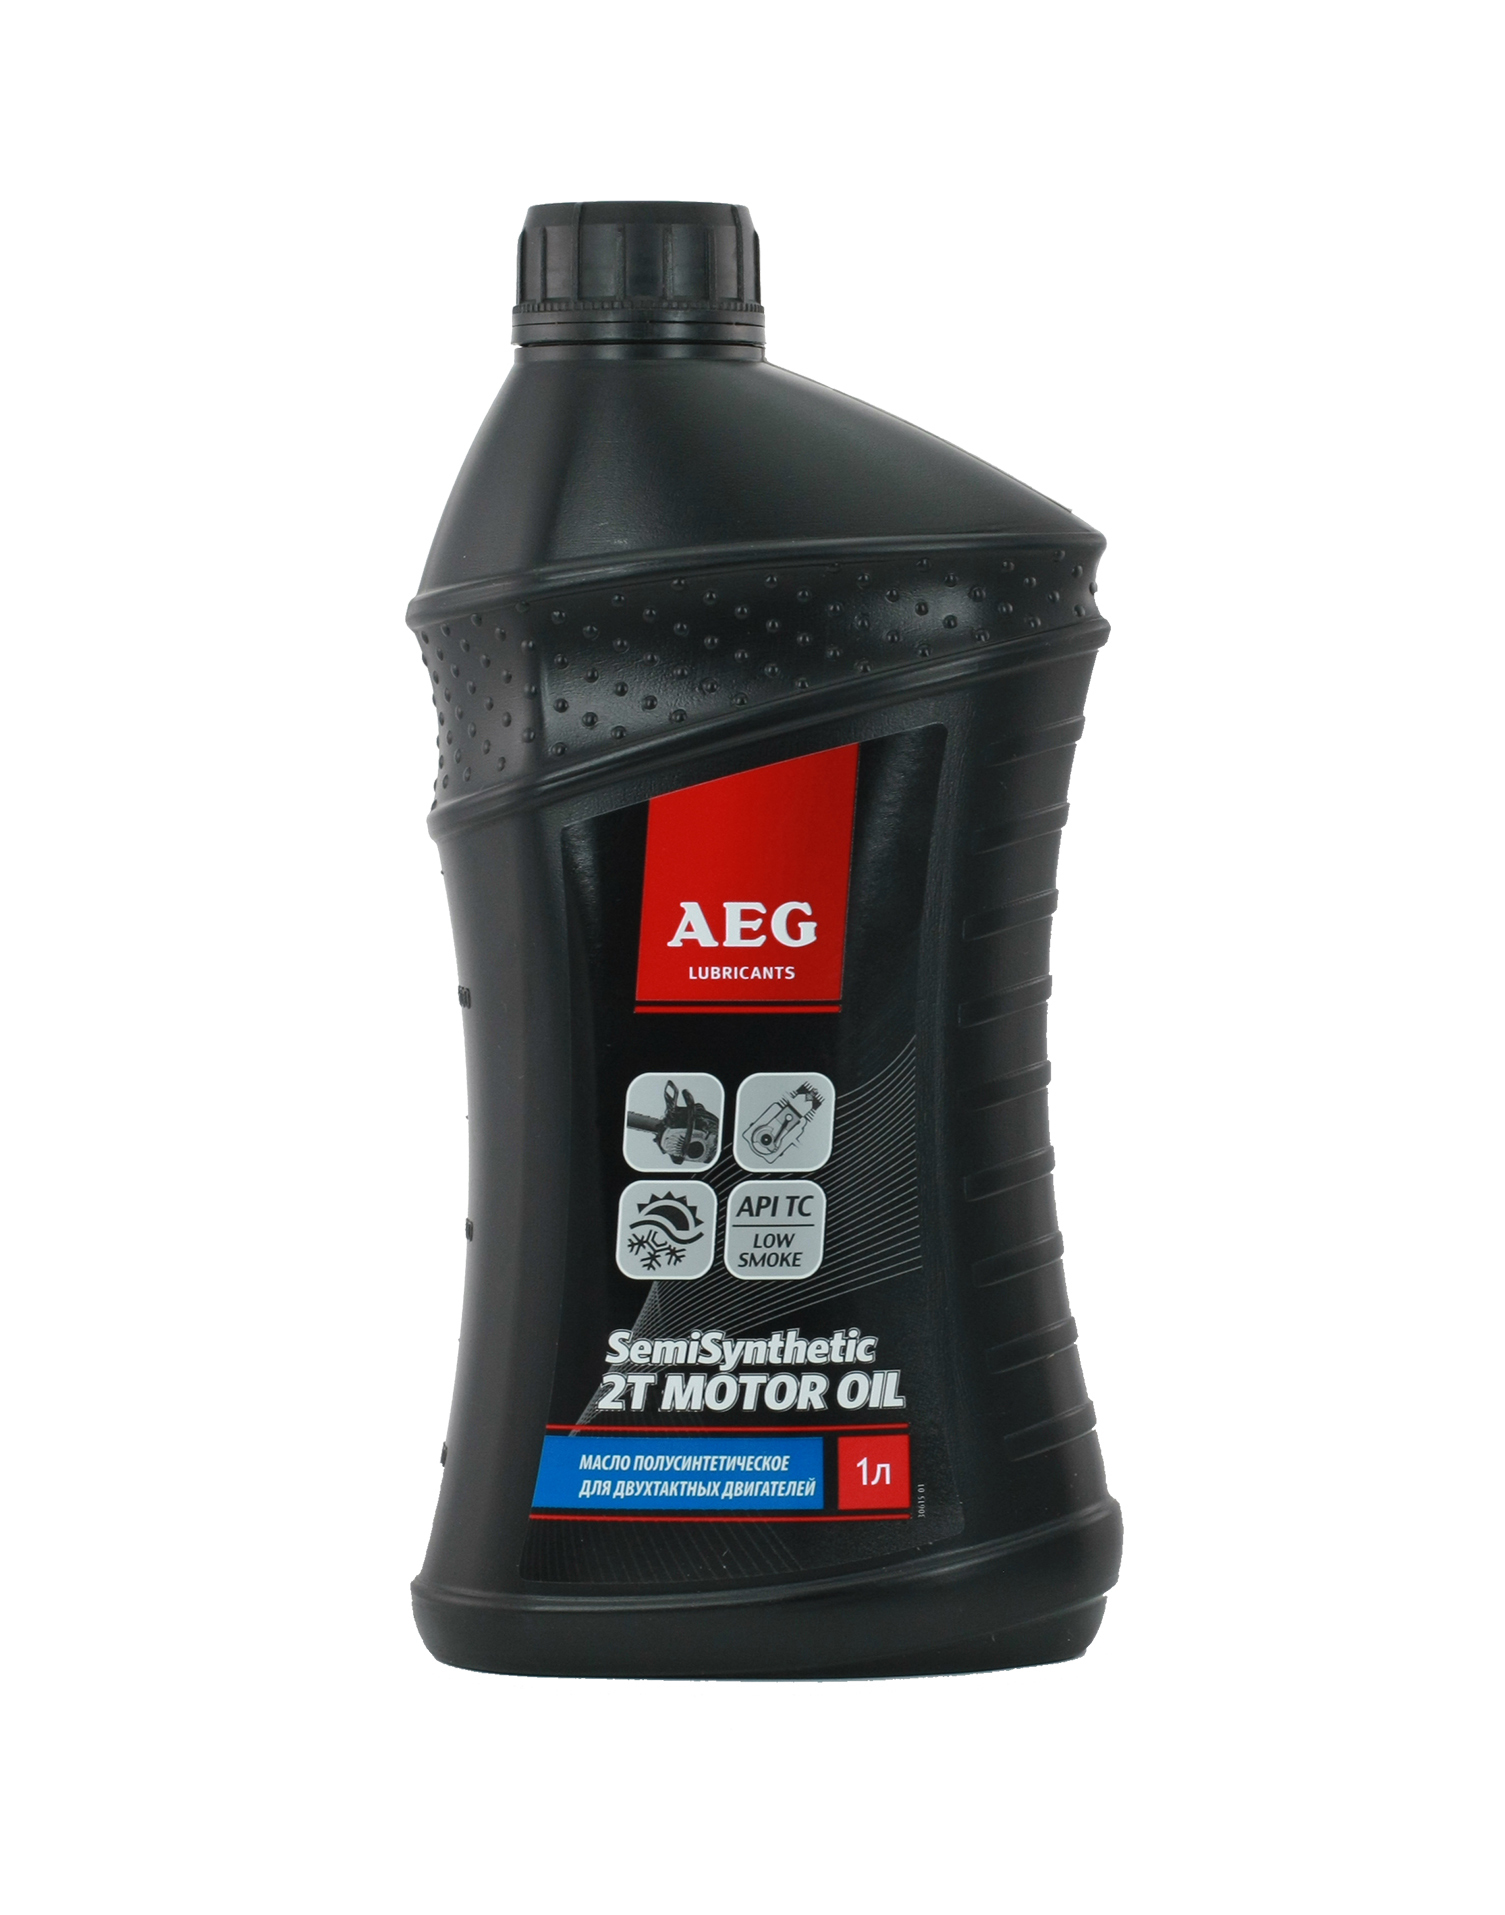 Масло api ch. AEG Universal 2t Motor Oil API TC. Масло AEG Compressor Premium Oil VG-100 1 Л. Масло «AEG Compressor Premium Oil VG-100» компрессорное. 1л. (30613).